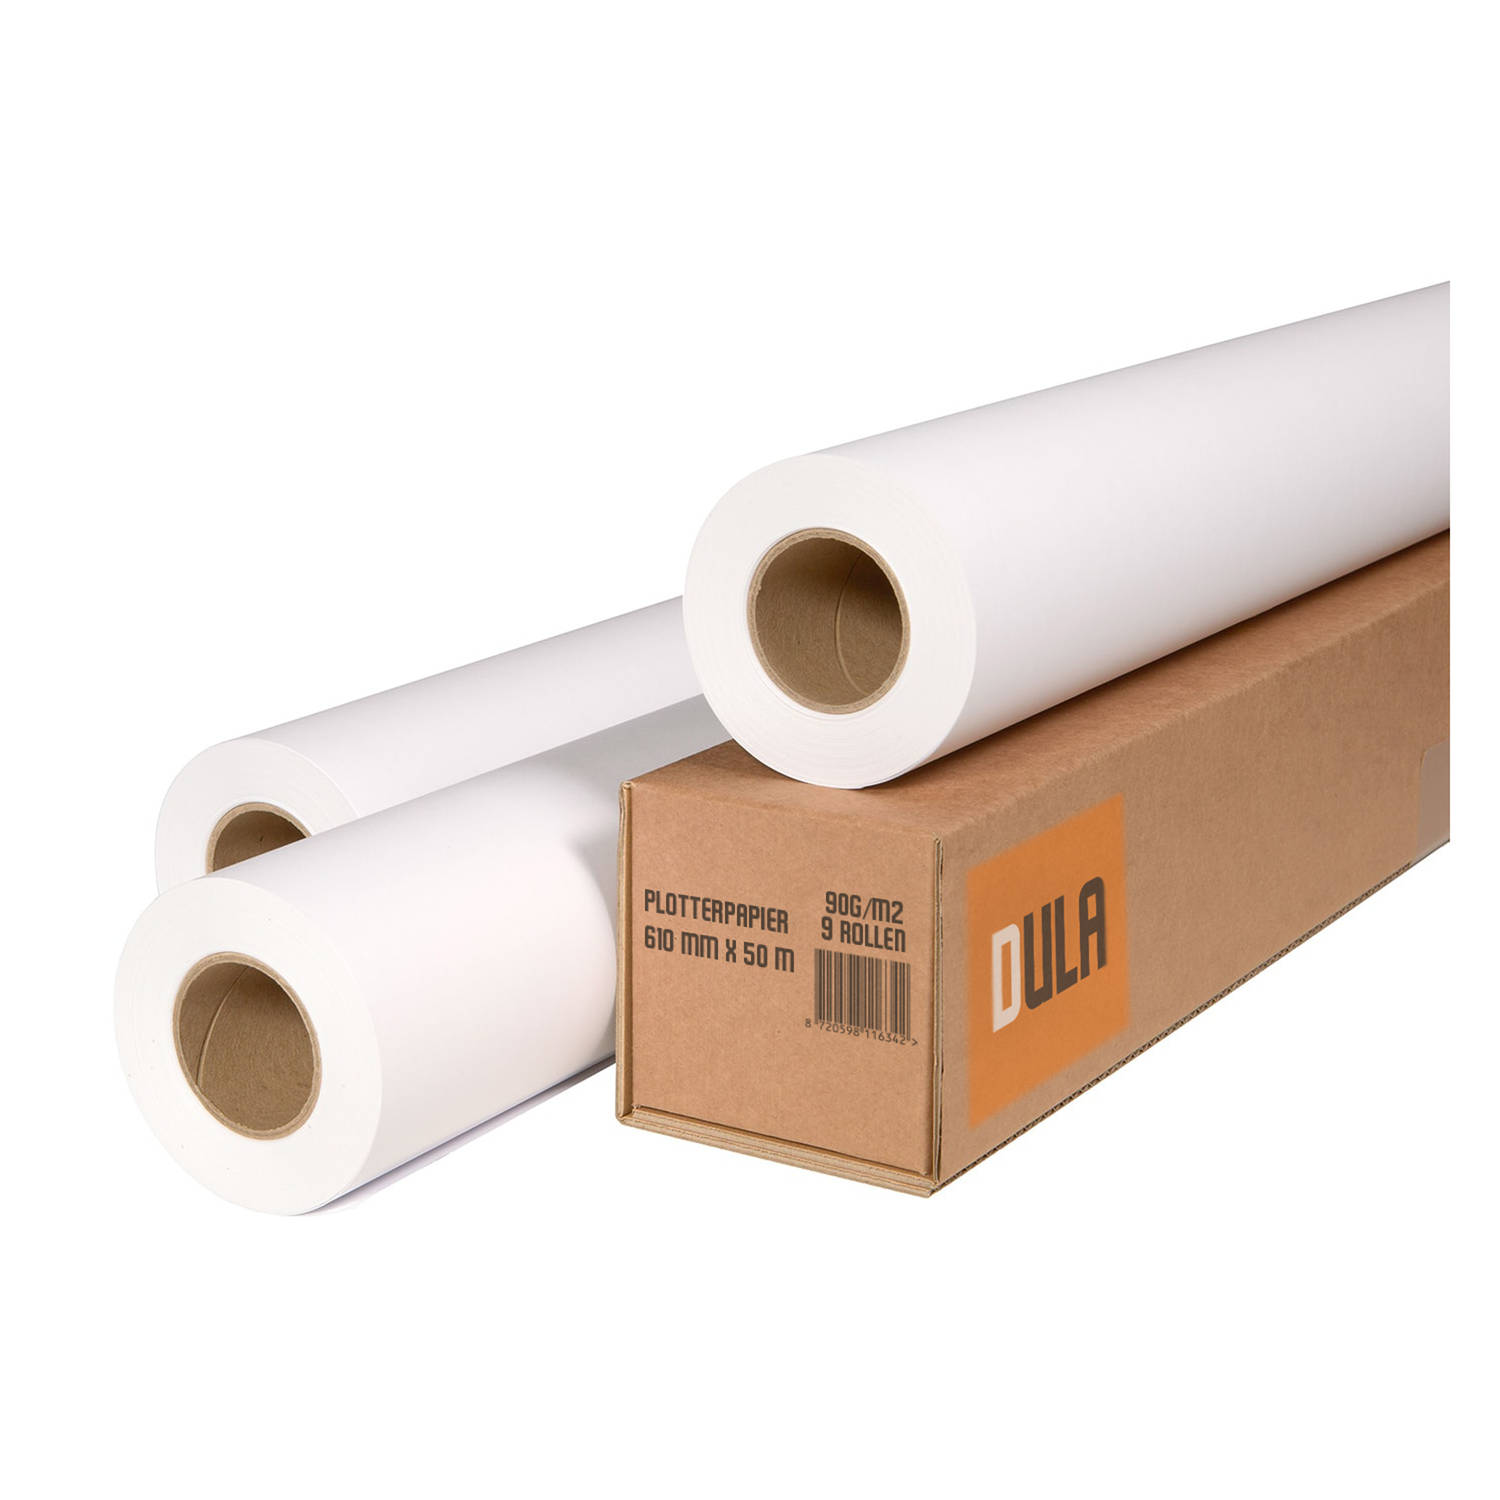 DULA Plotterpapier inkjetpapier 610mm x 50m 90 gram 9 rollen A1 oversize papier 24 inch